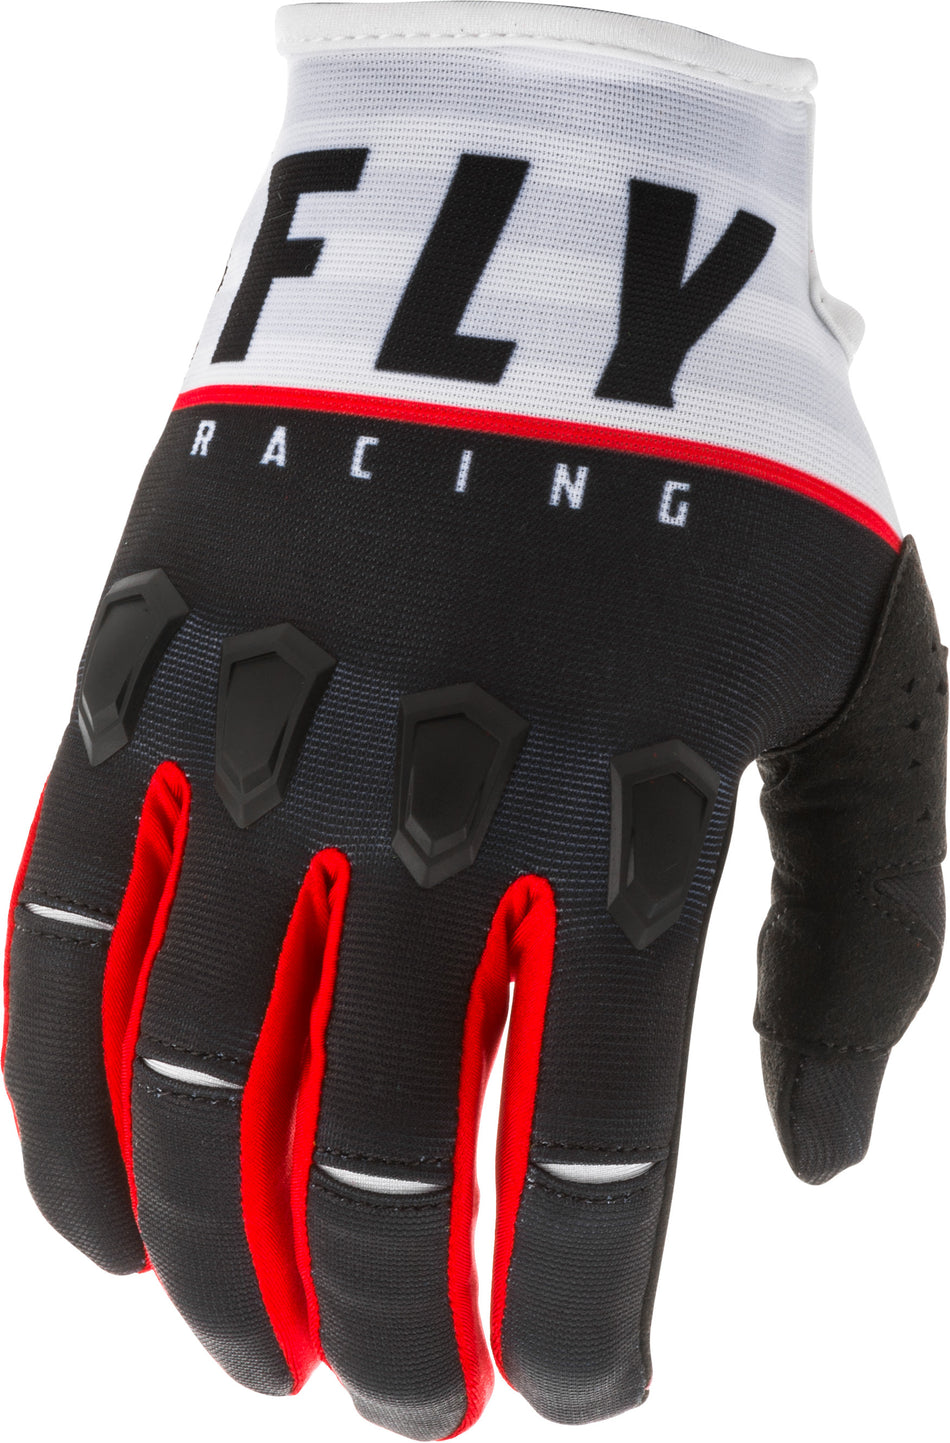 FLY RACING Kinetic K120 Gloves Black/White/Red Sz 09 373-41309